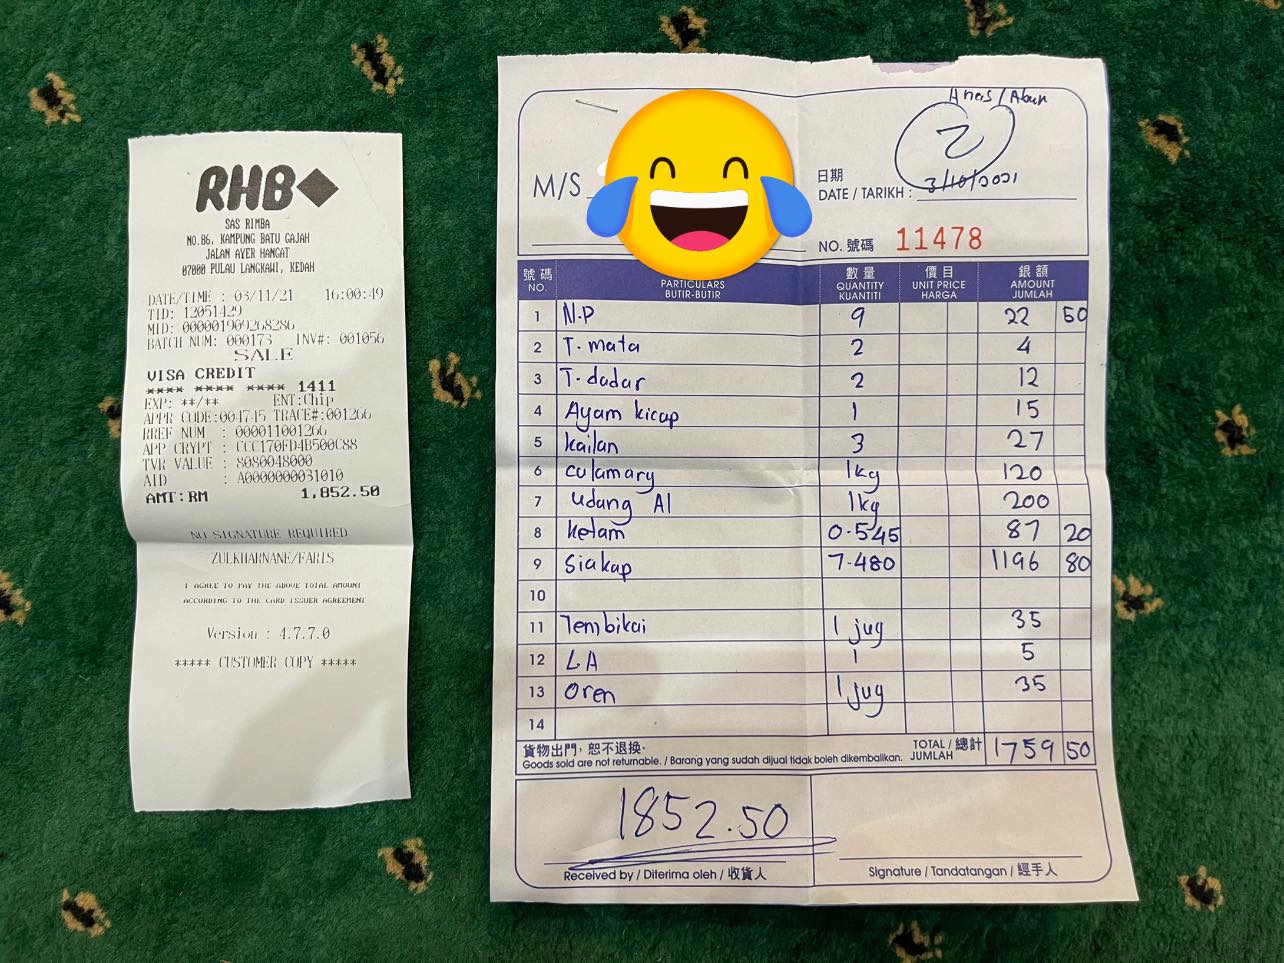 The receipt of the rm1196. 80 siakap fish